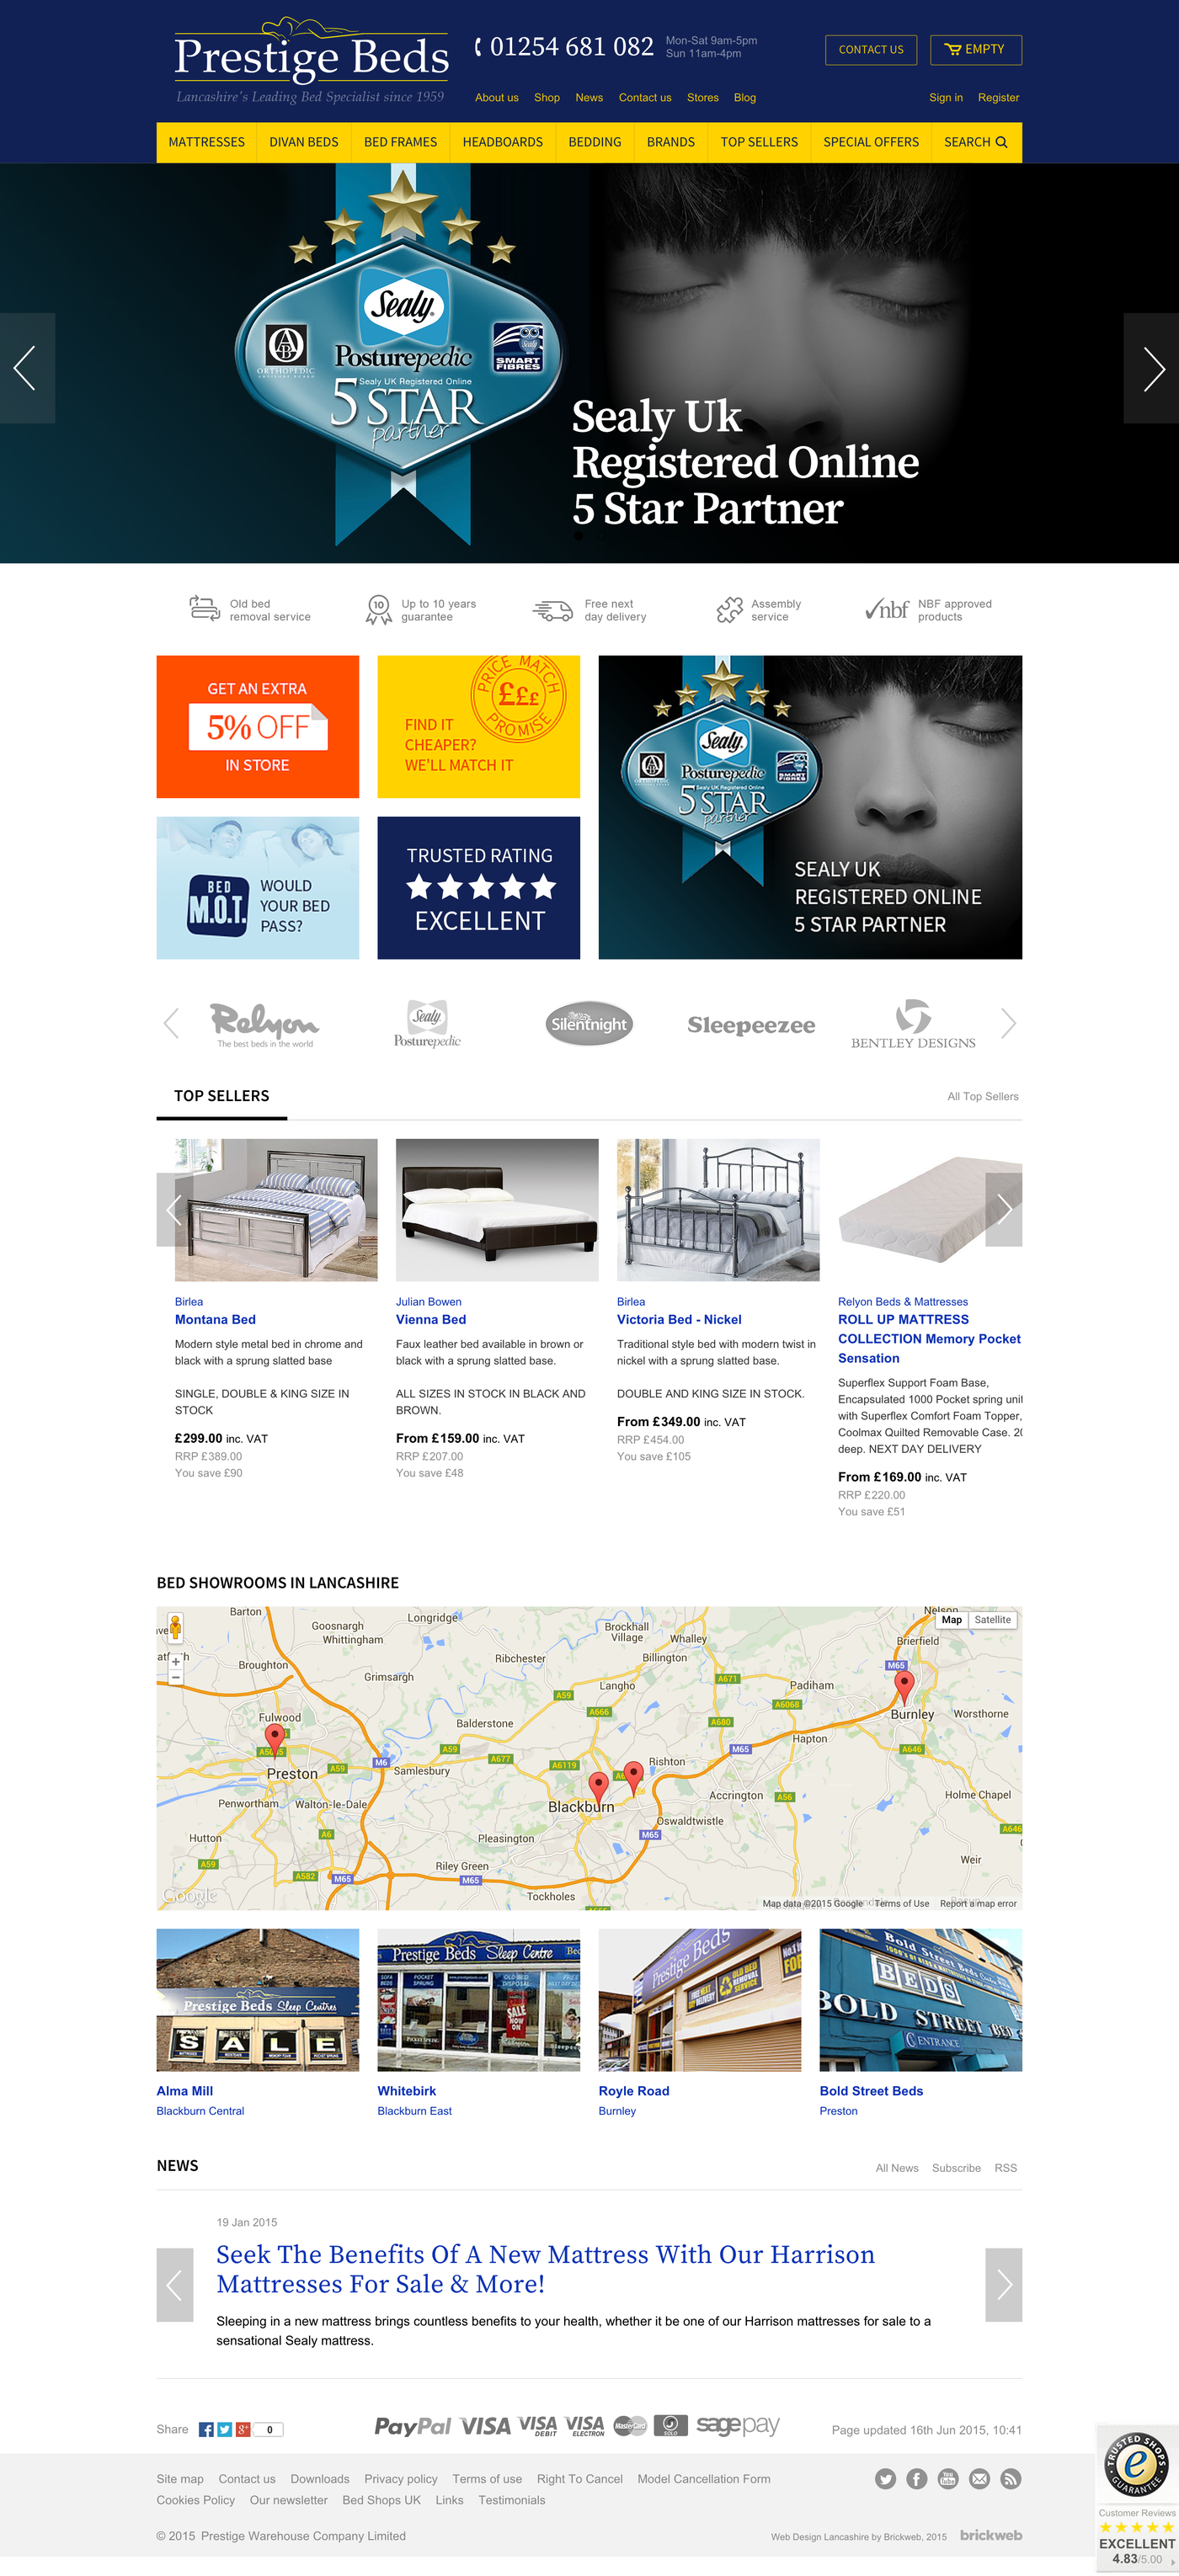 Prestige Beds Home page